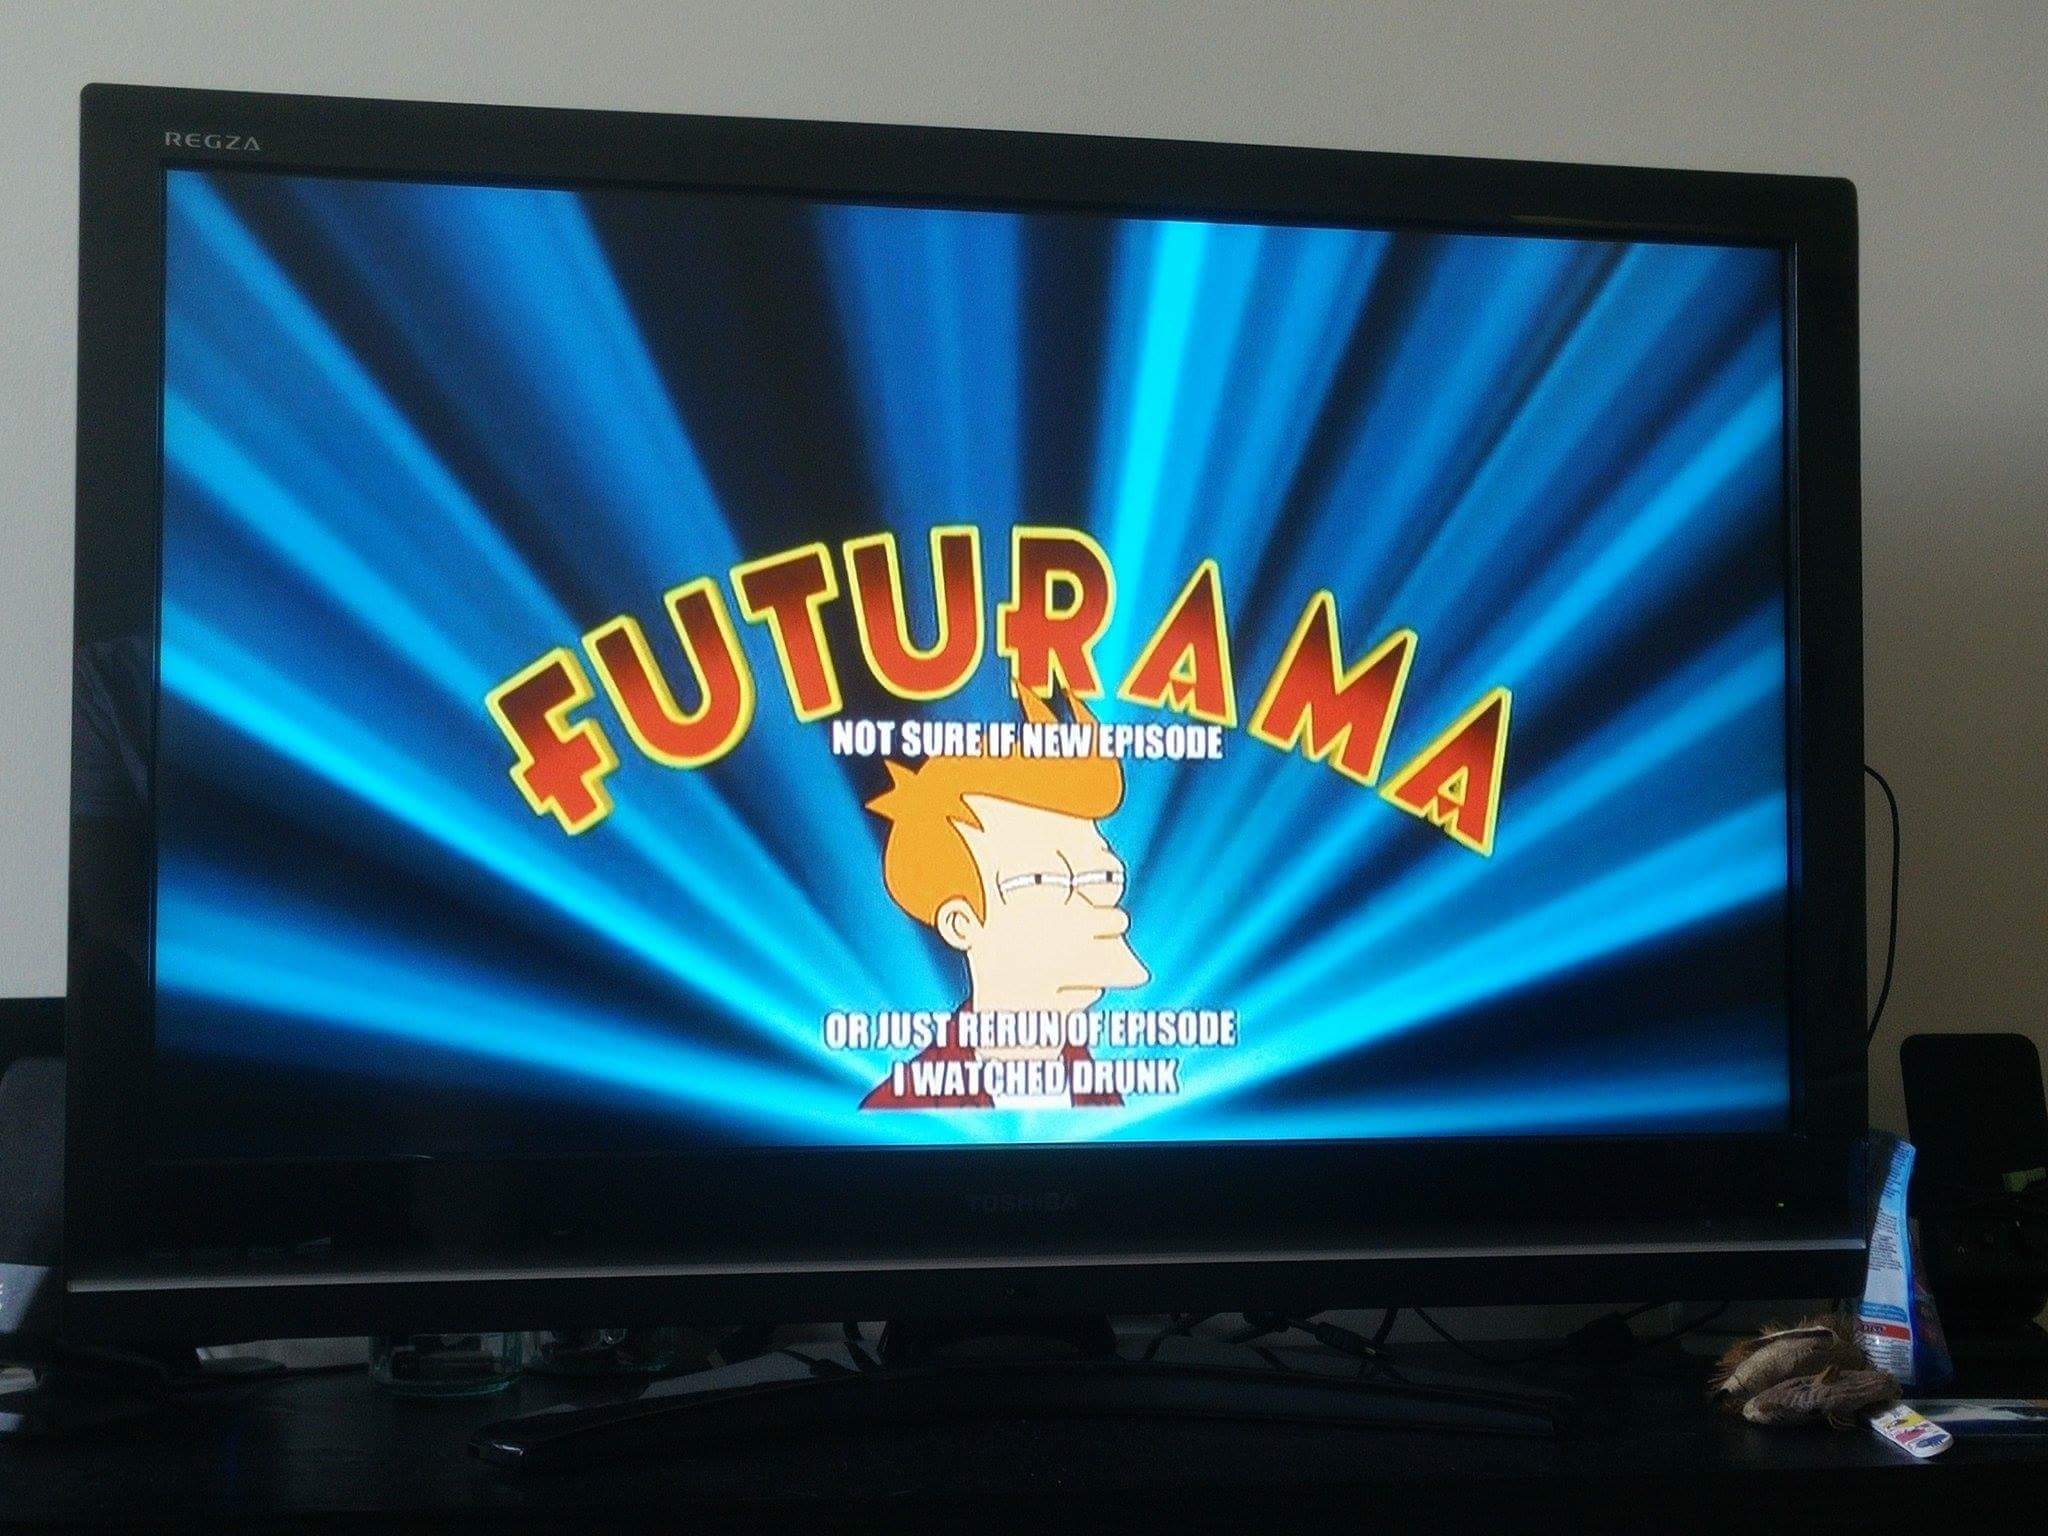 screen - Regza Tuturama Not Sure If New Episode Or Just Rerunof Episode Watched Drunk